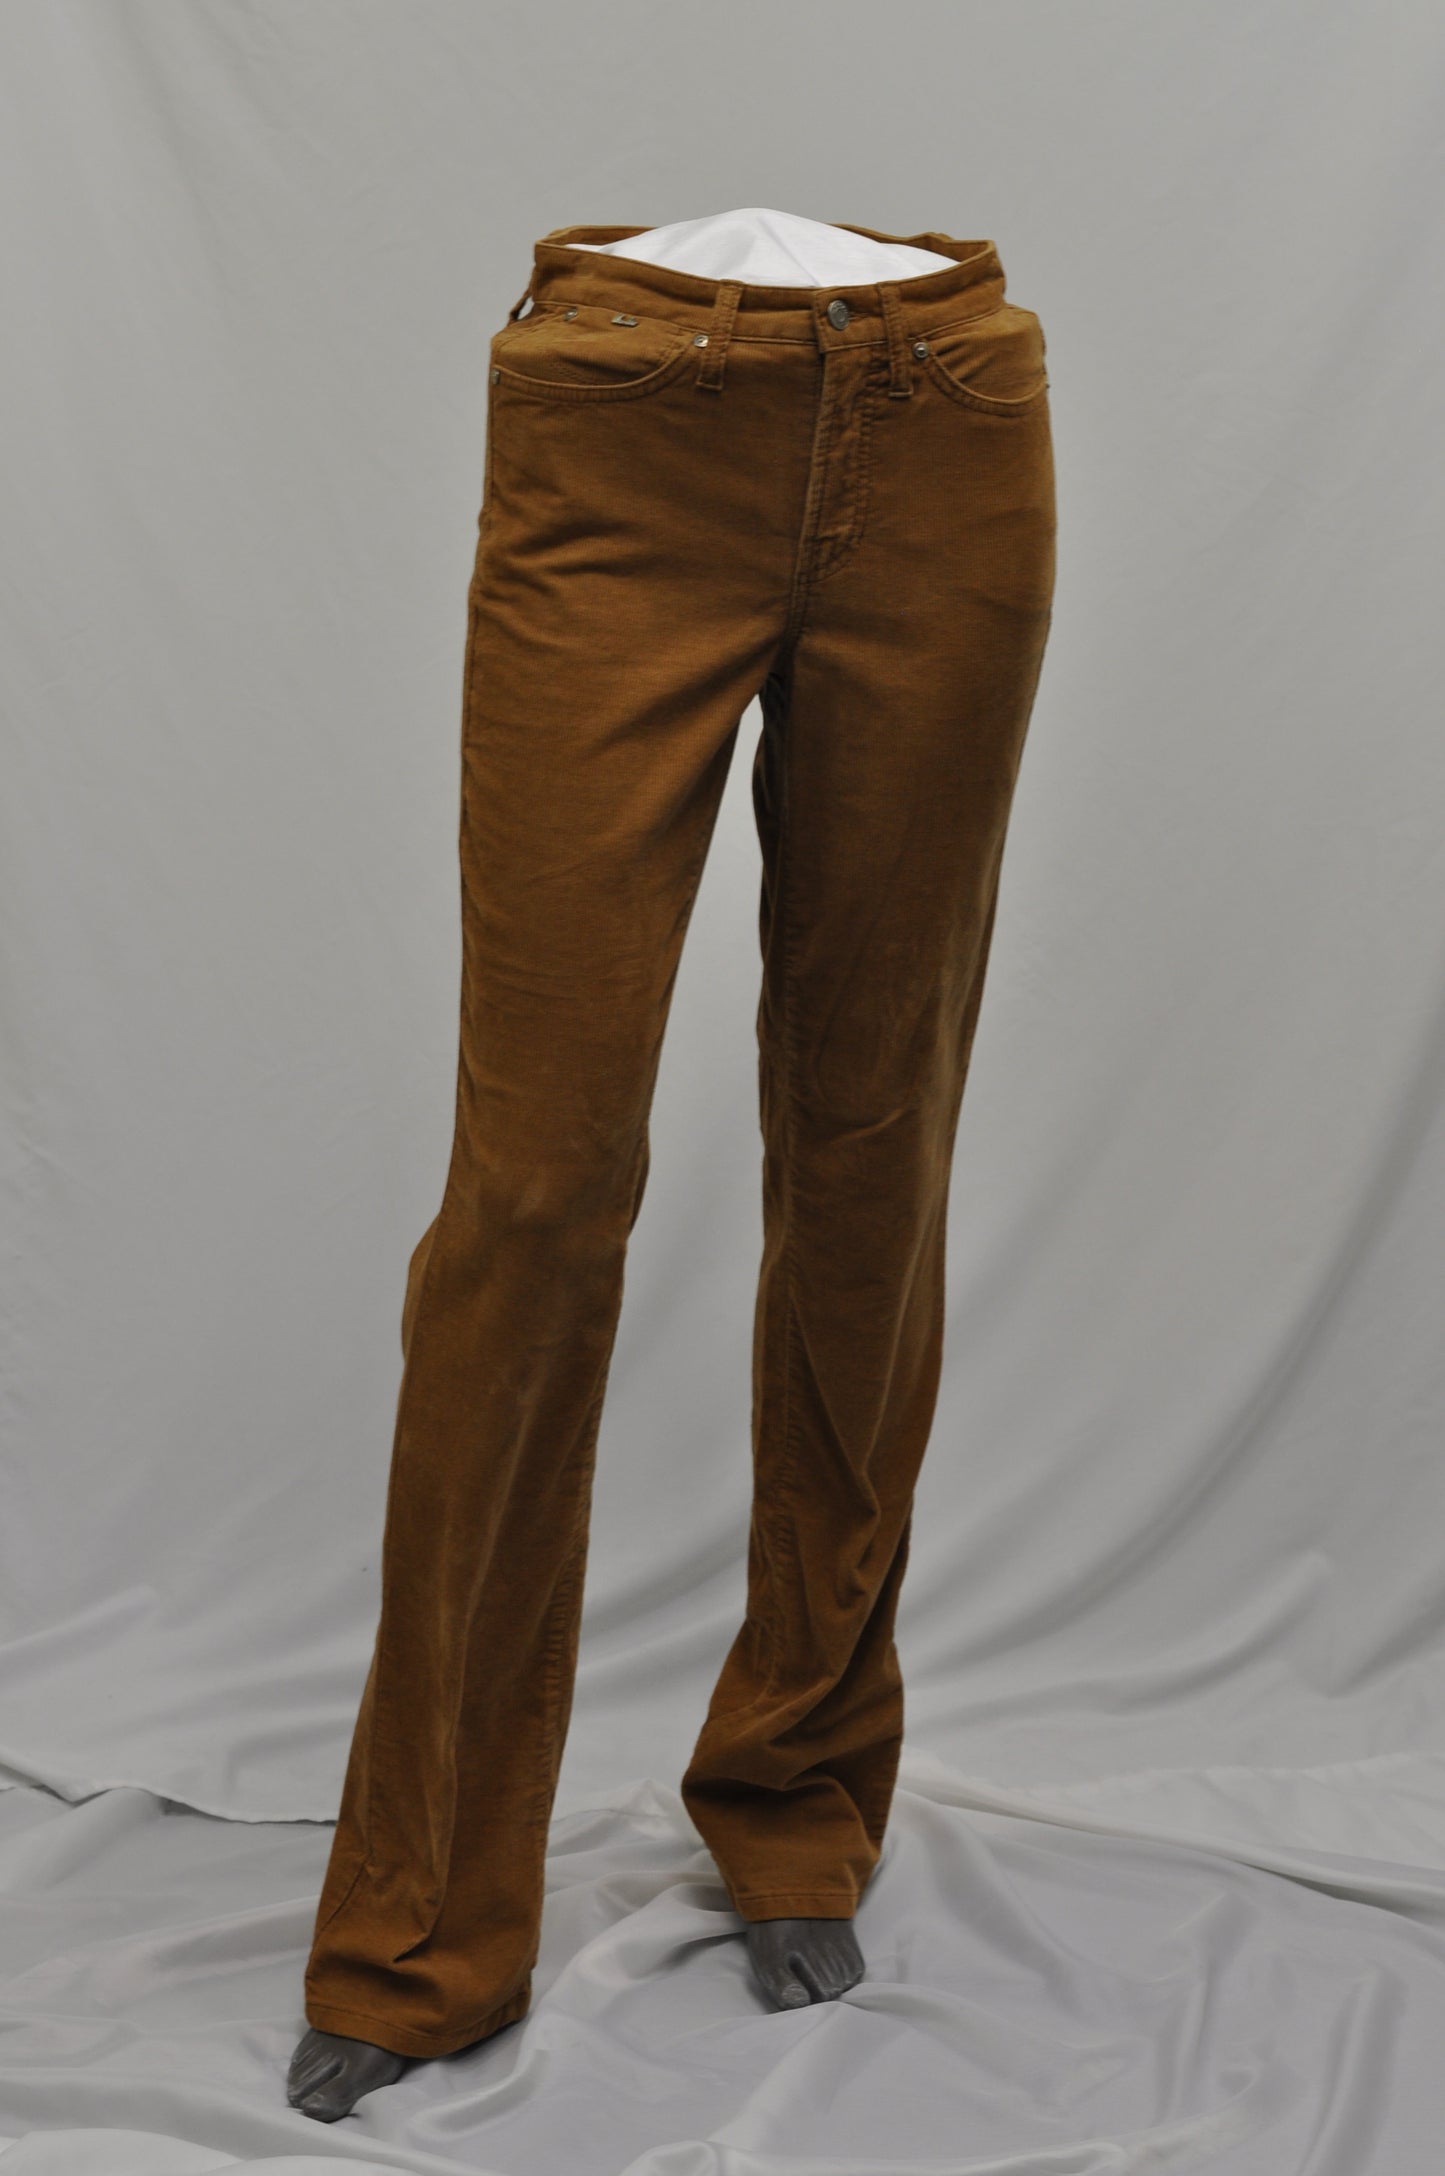 Cambio Dark Khaki Corduroy Pants - Size 4